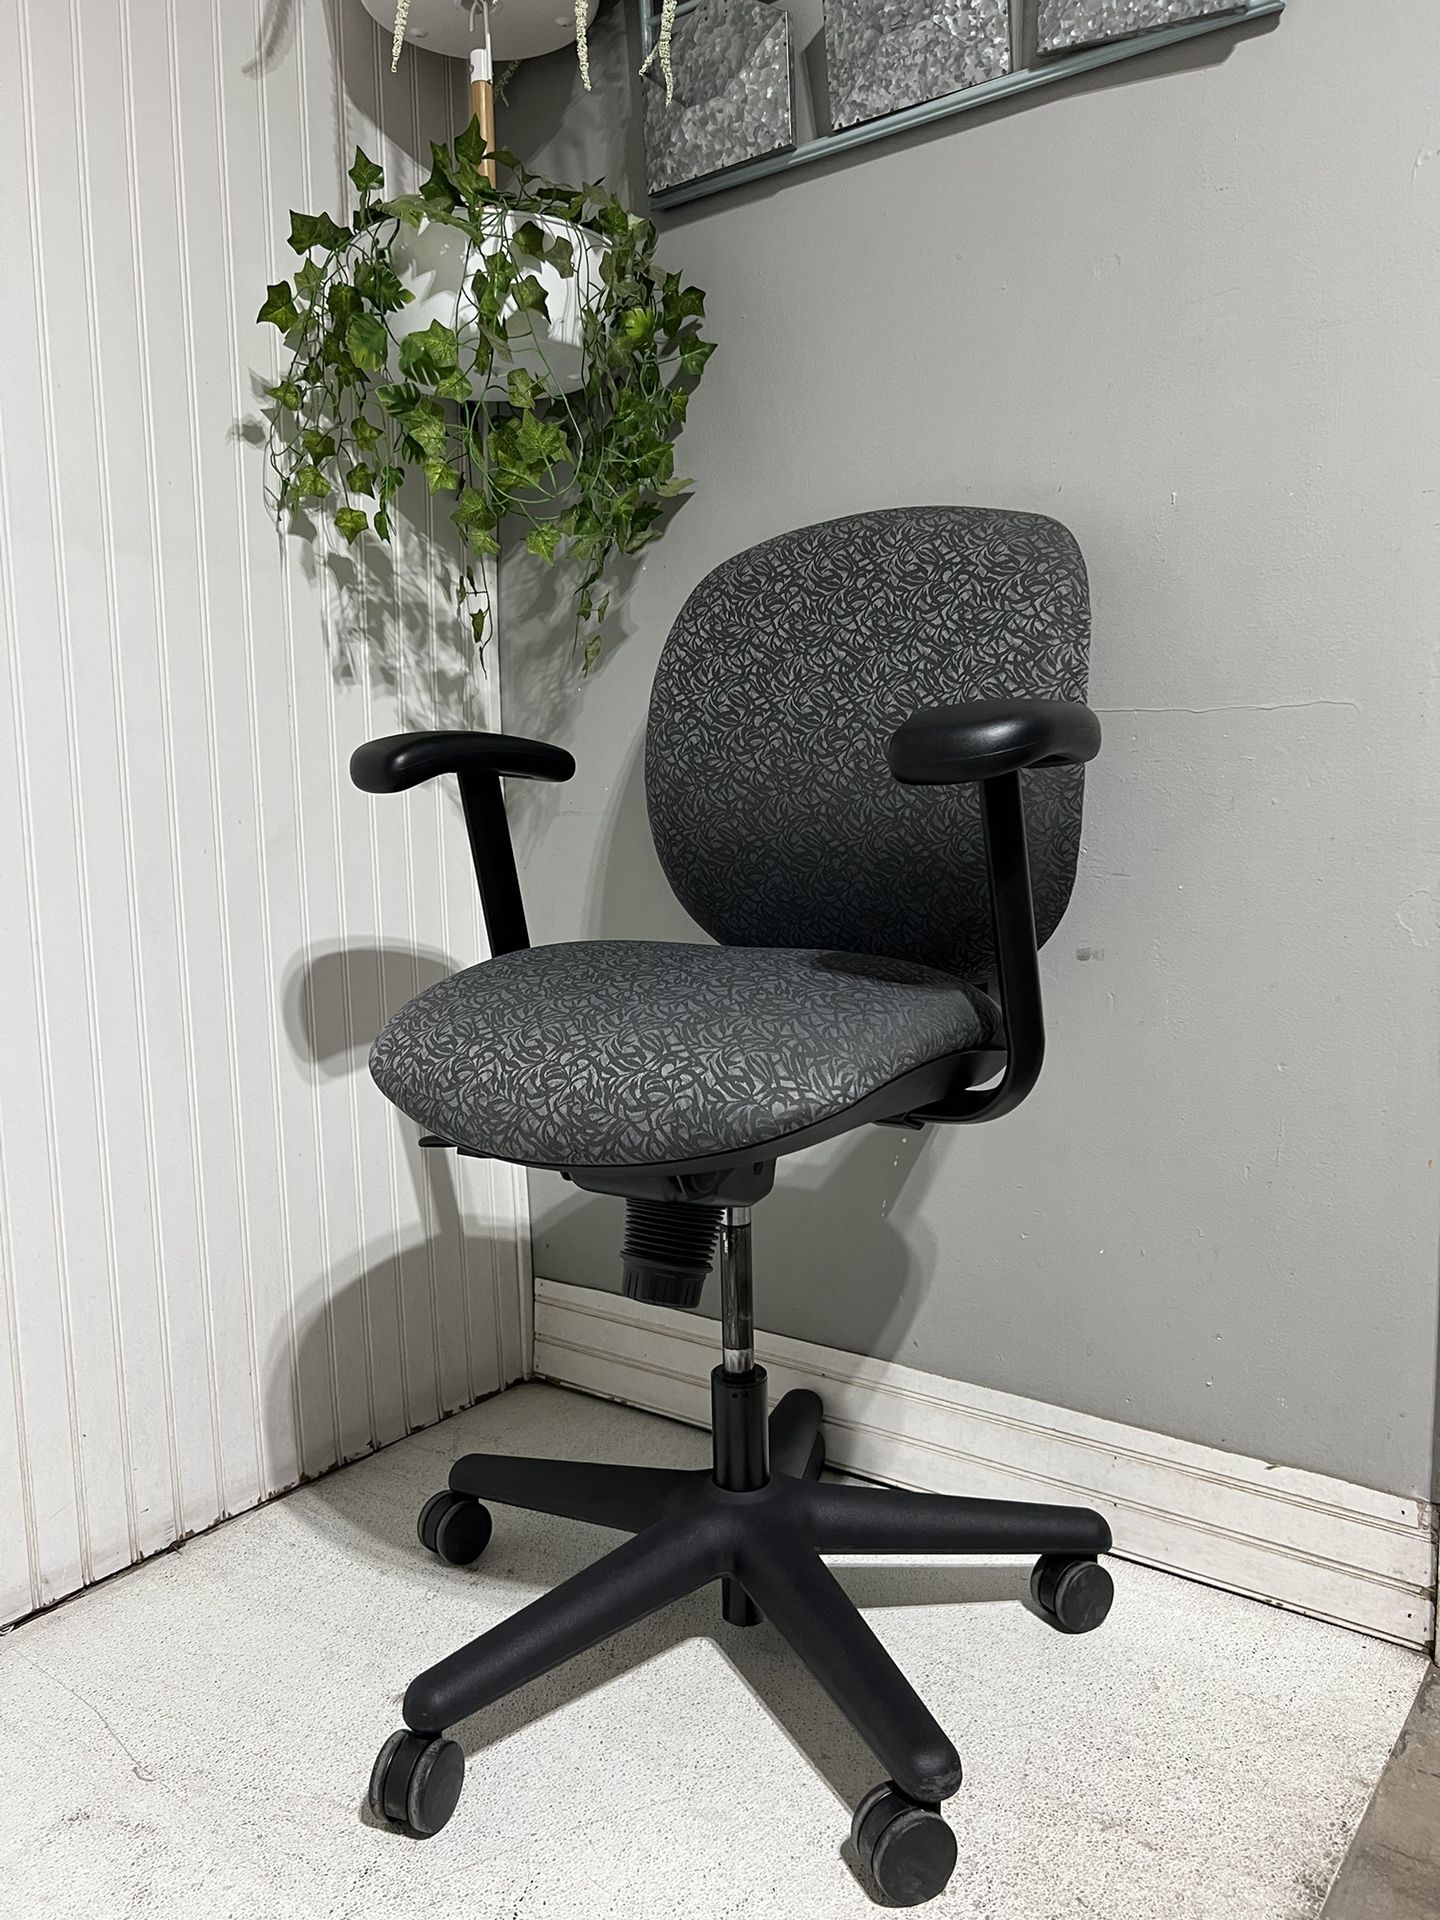 Office Chair, Desk Chair 